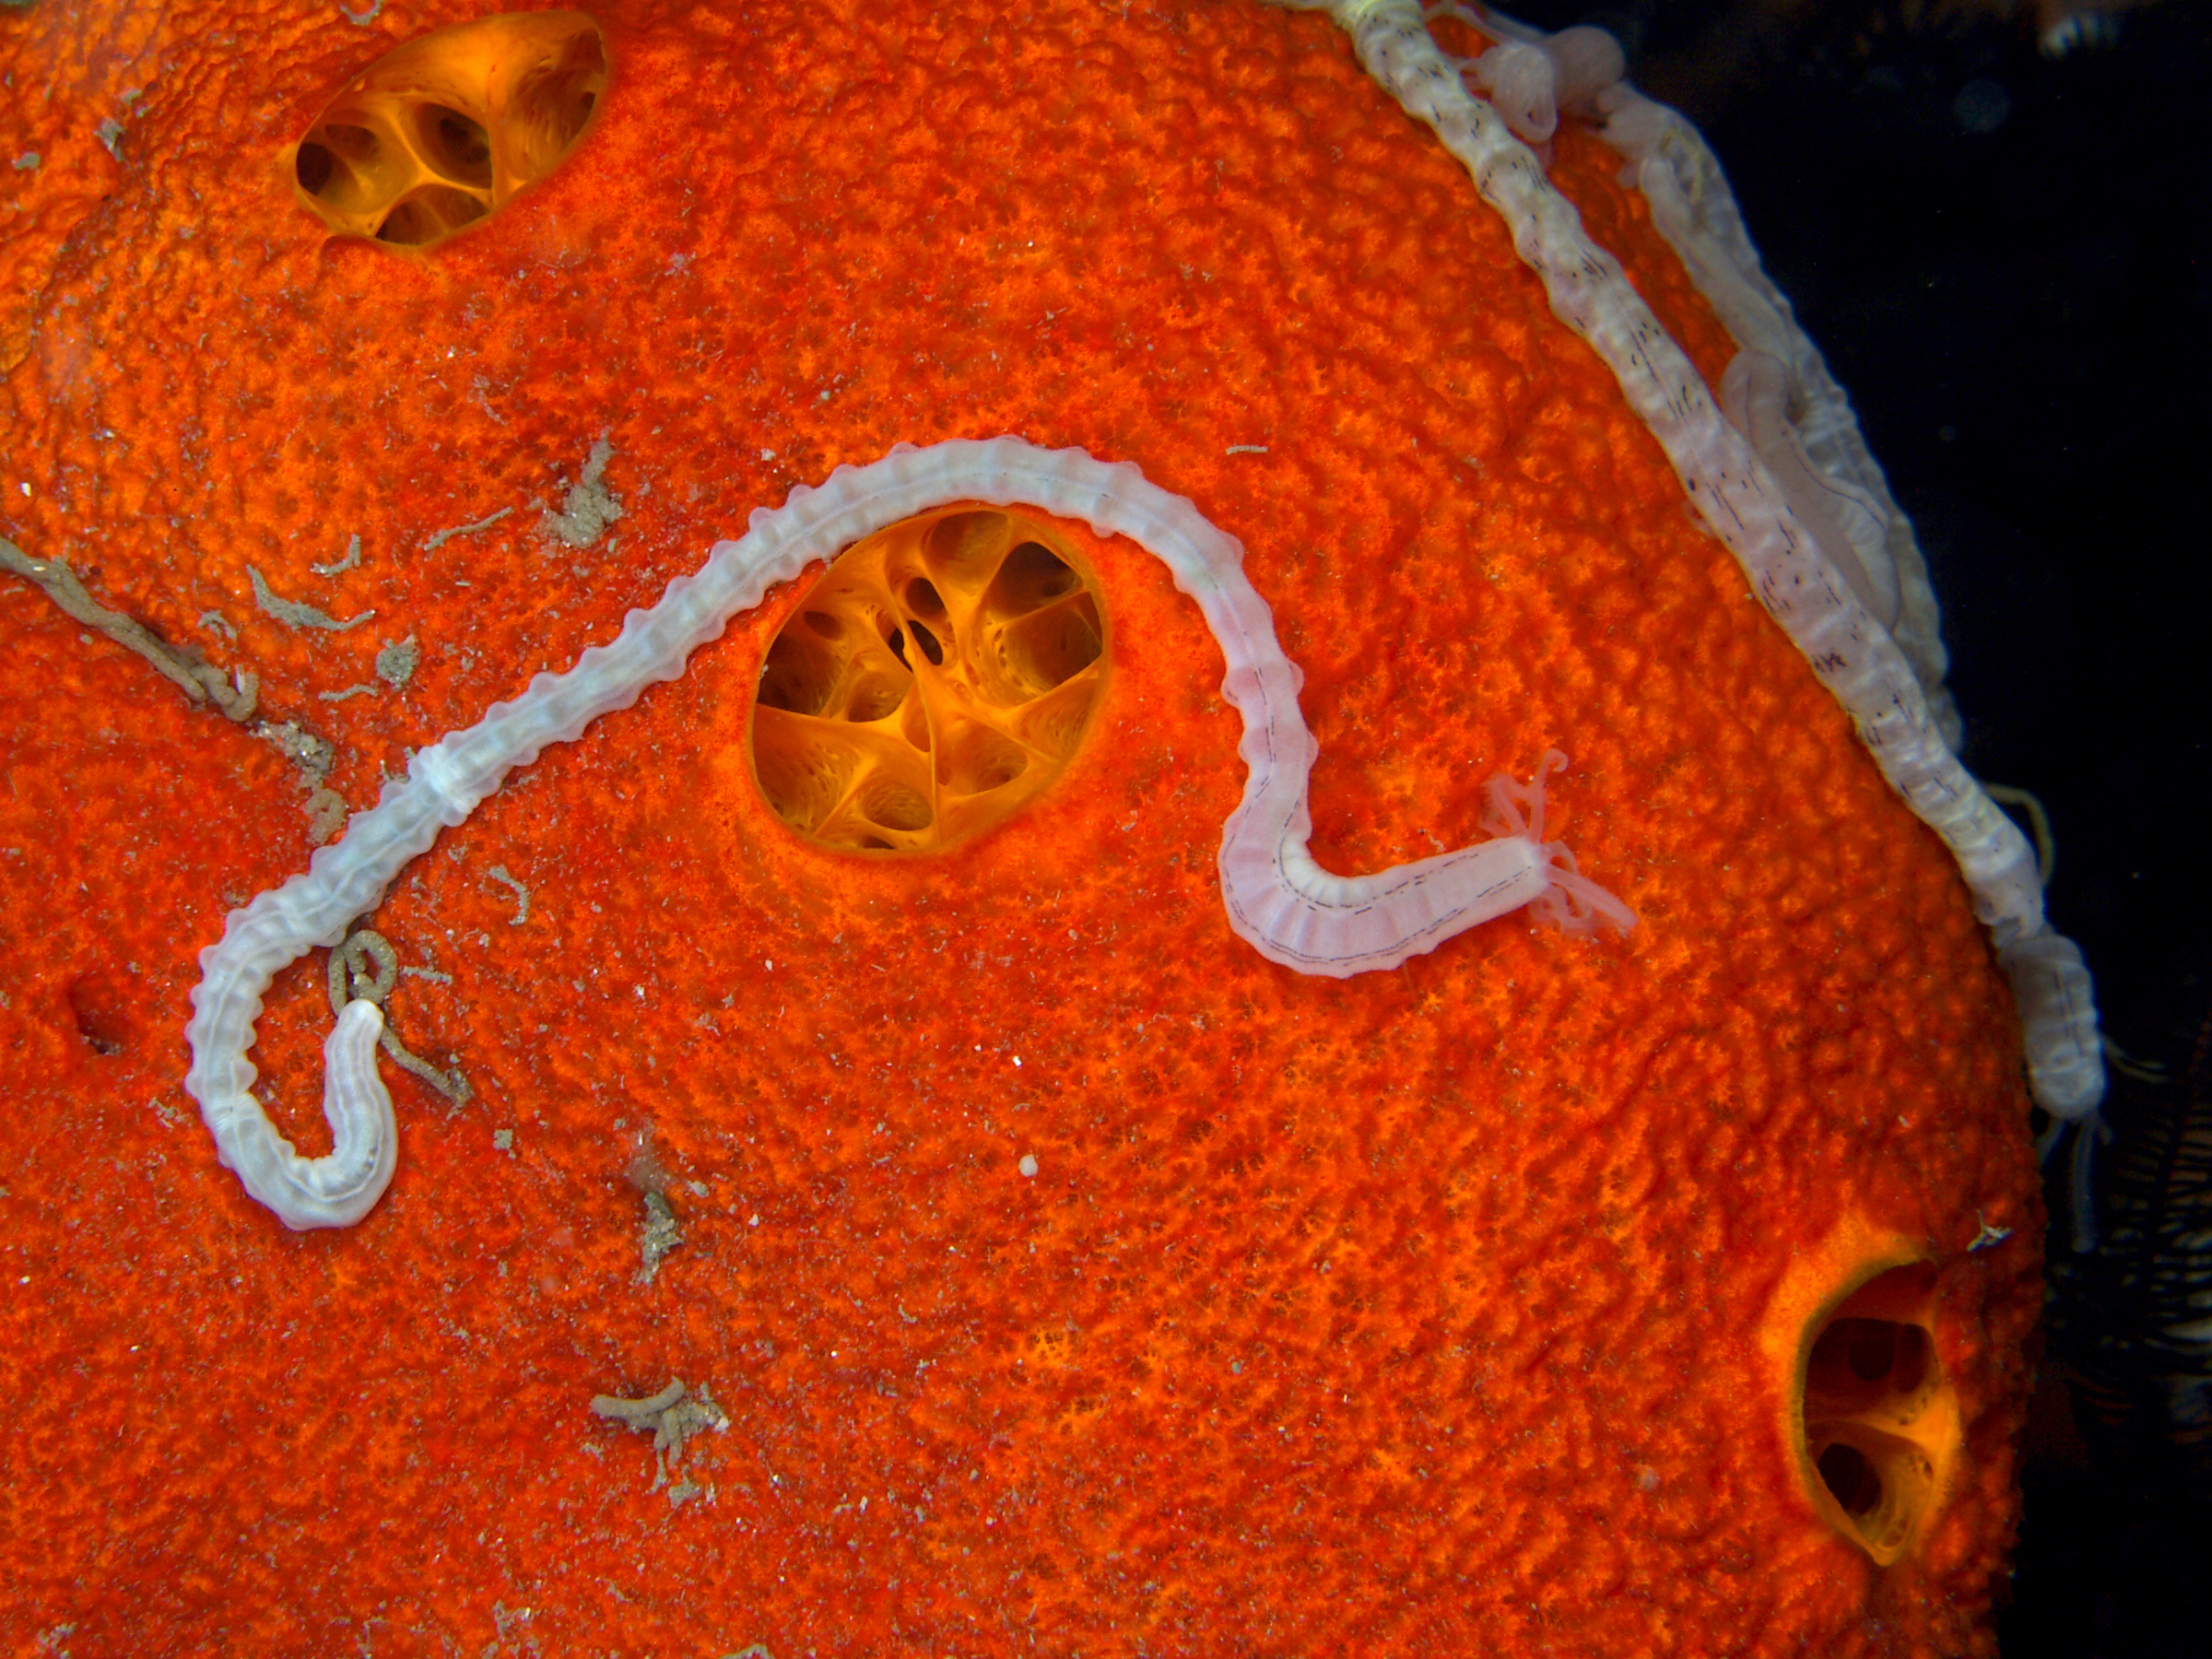 Synaptula lamperi (Sea cucumber) on Plakortis sp. (Chicken liver sponge)